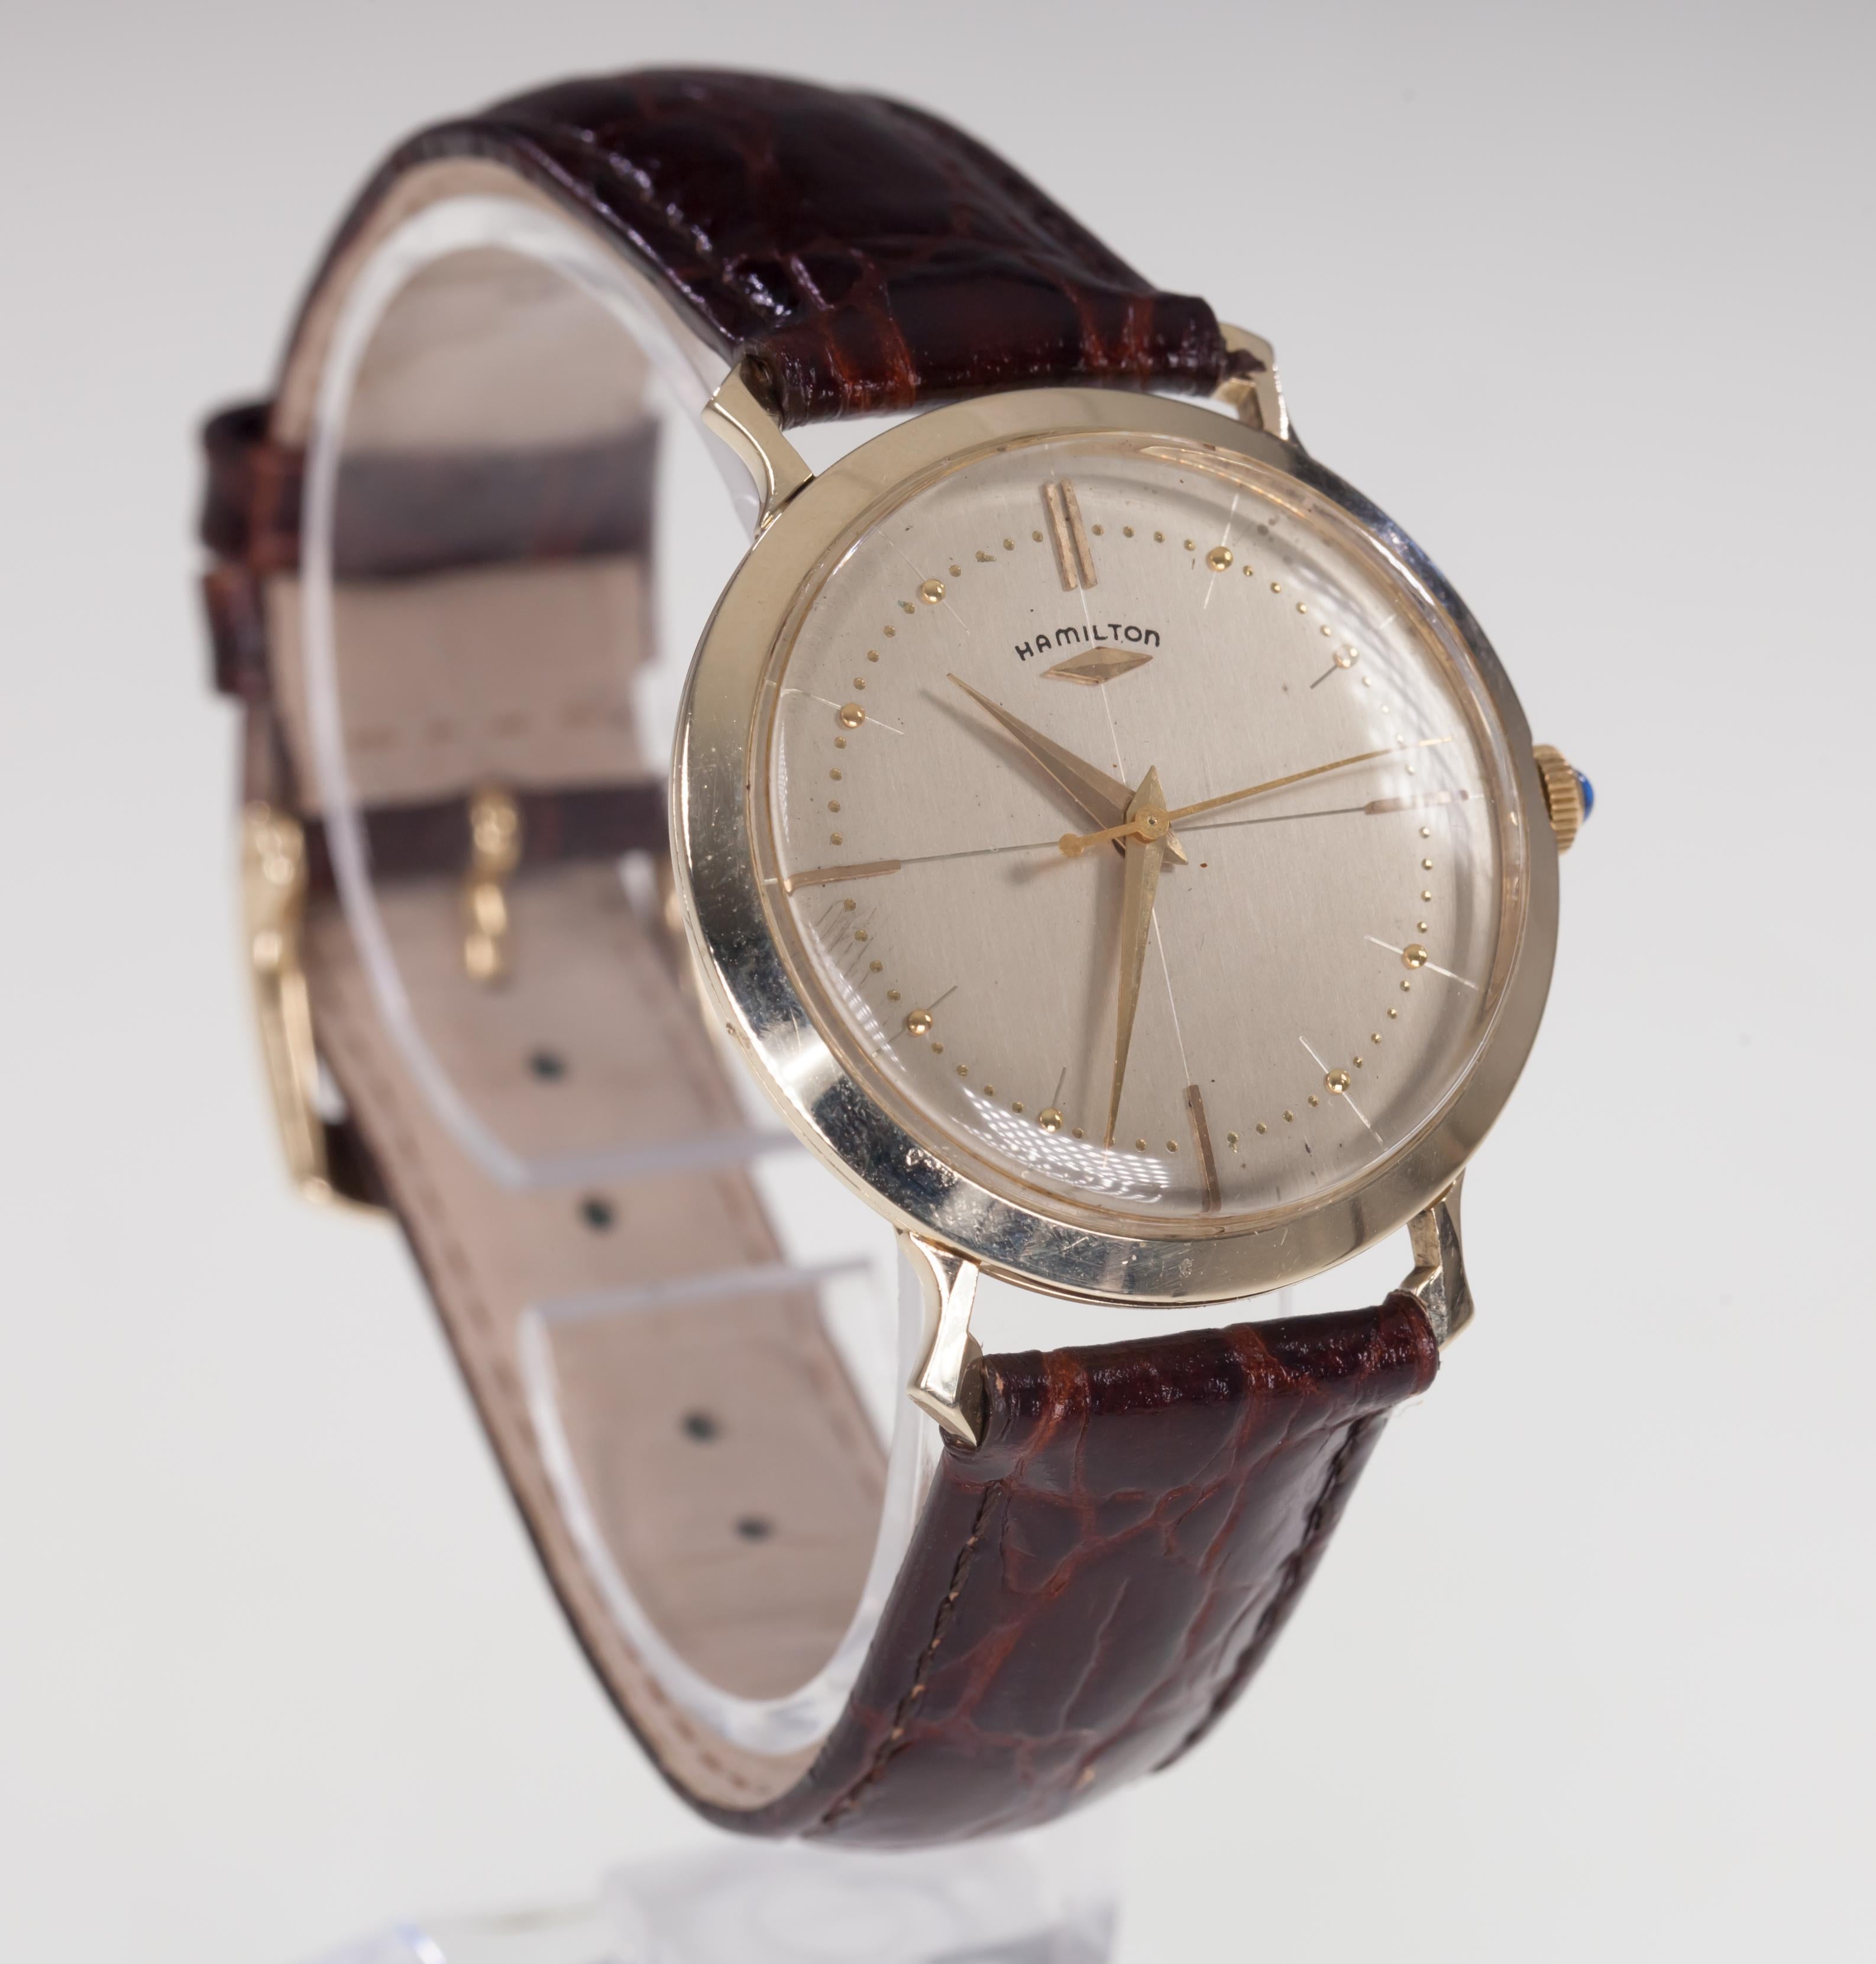 hamilton 14k gold watch vintage men's